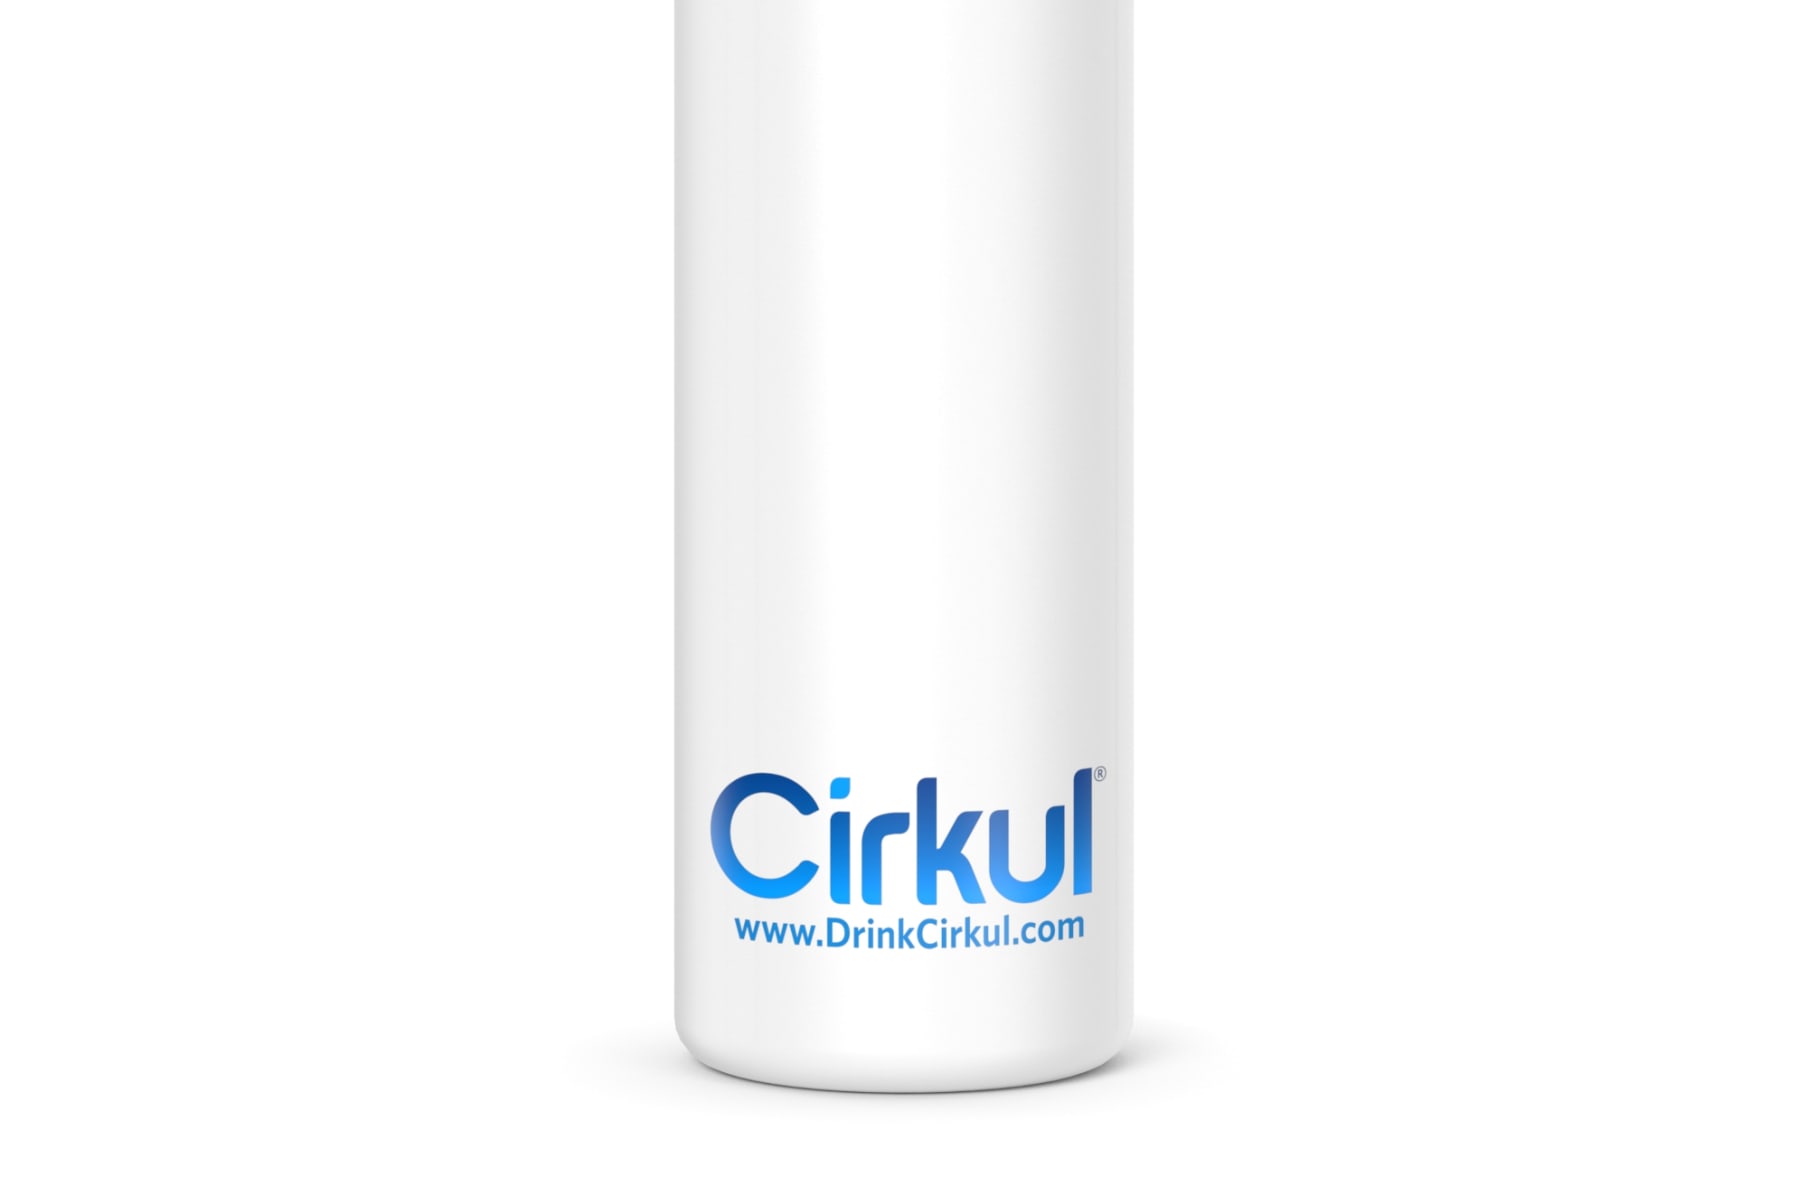 Cirkul: Transform Your Water